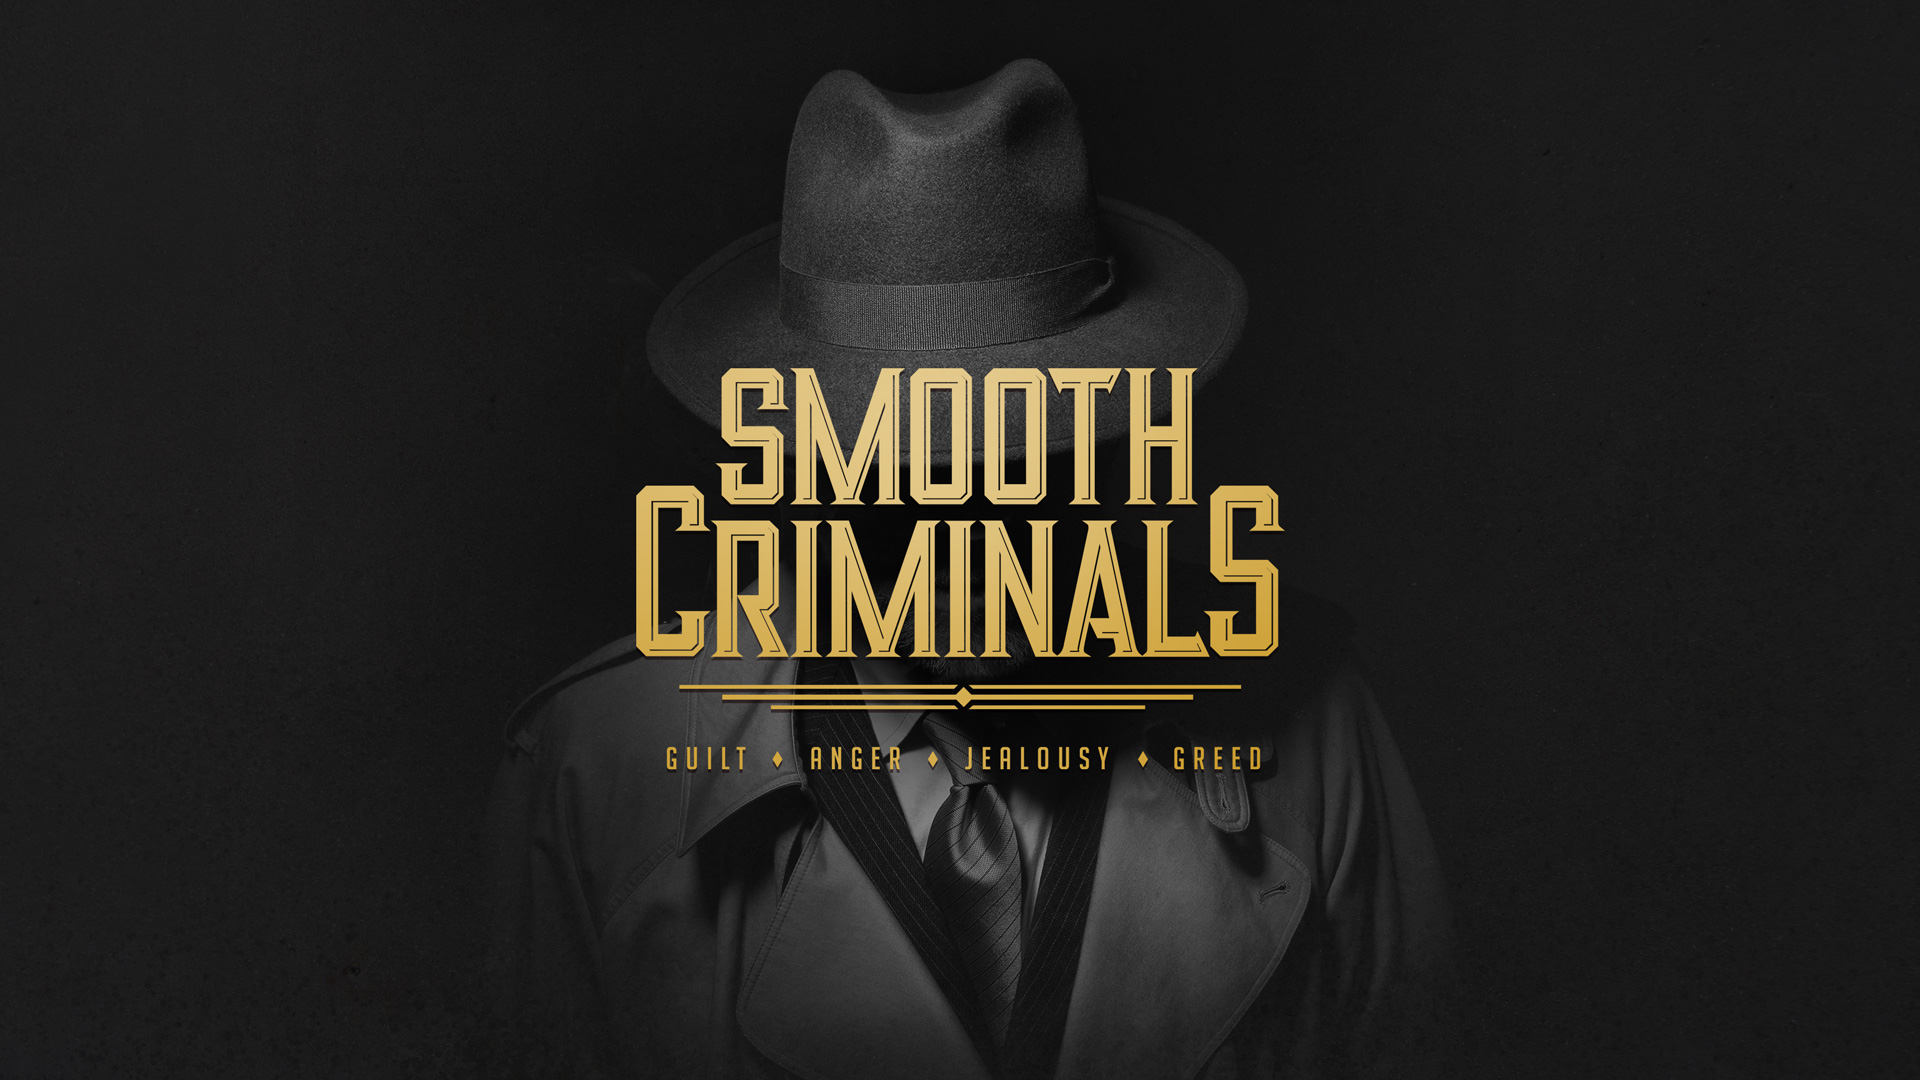 Smooth Criminals